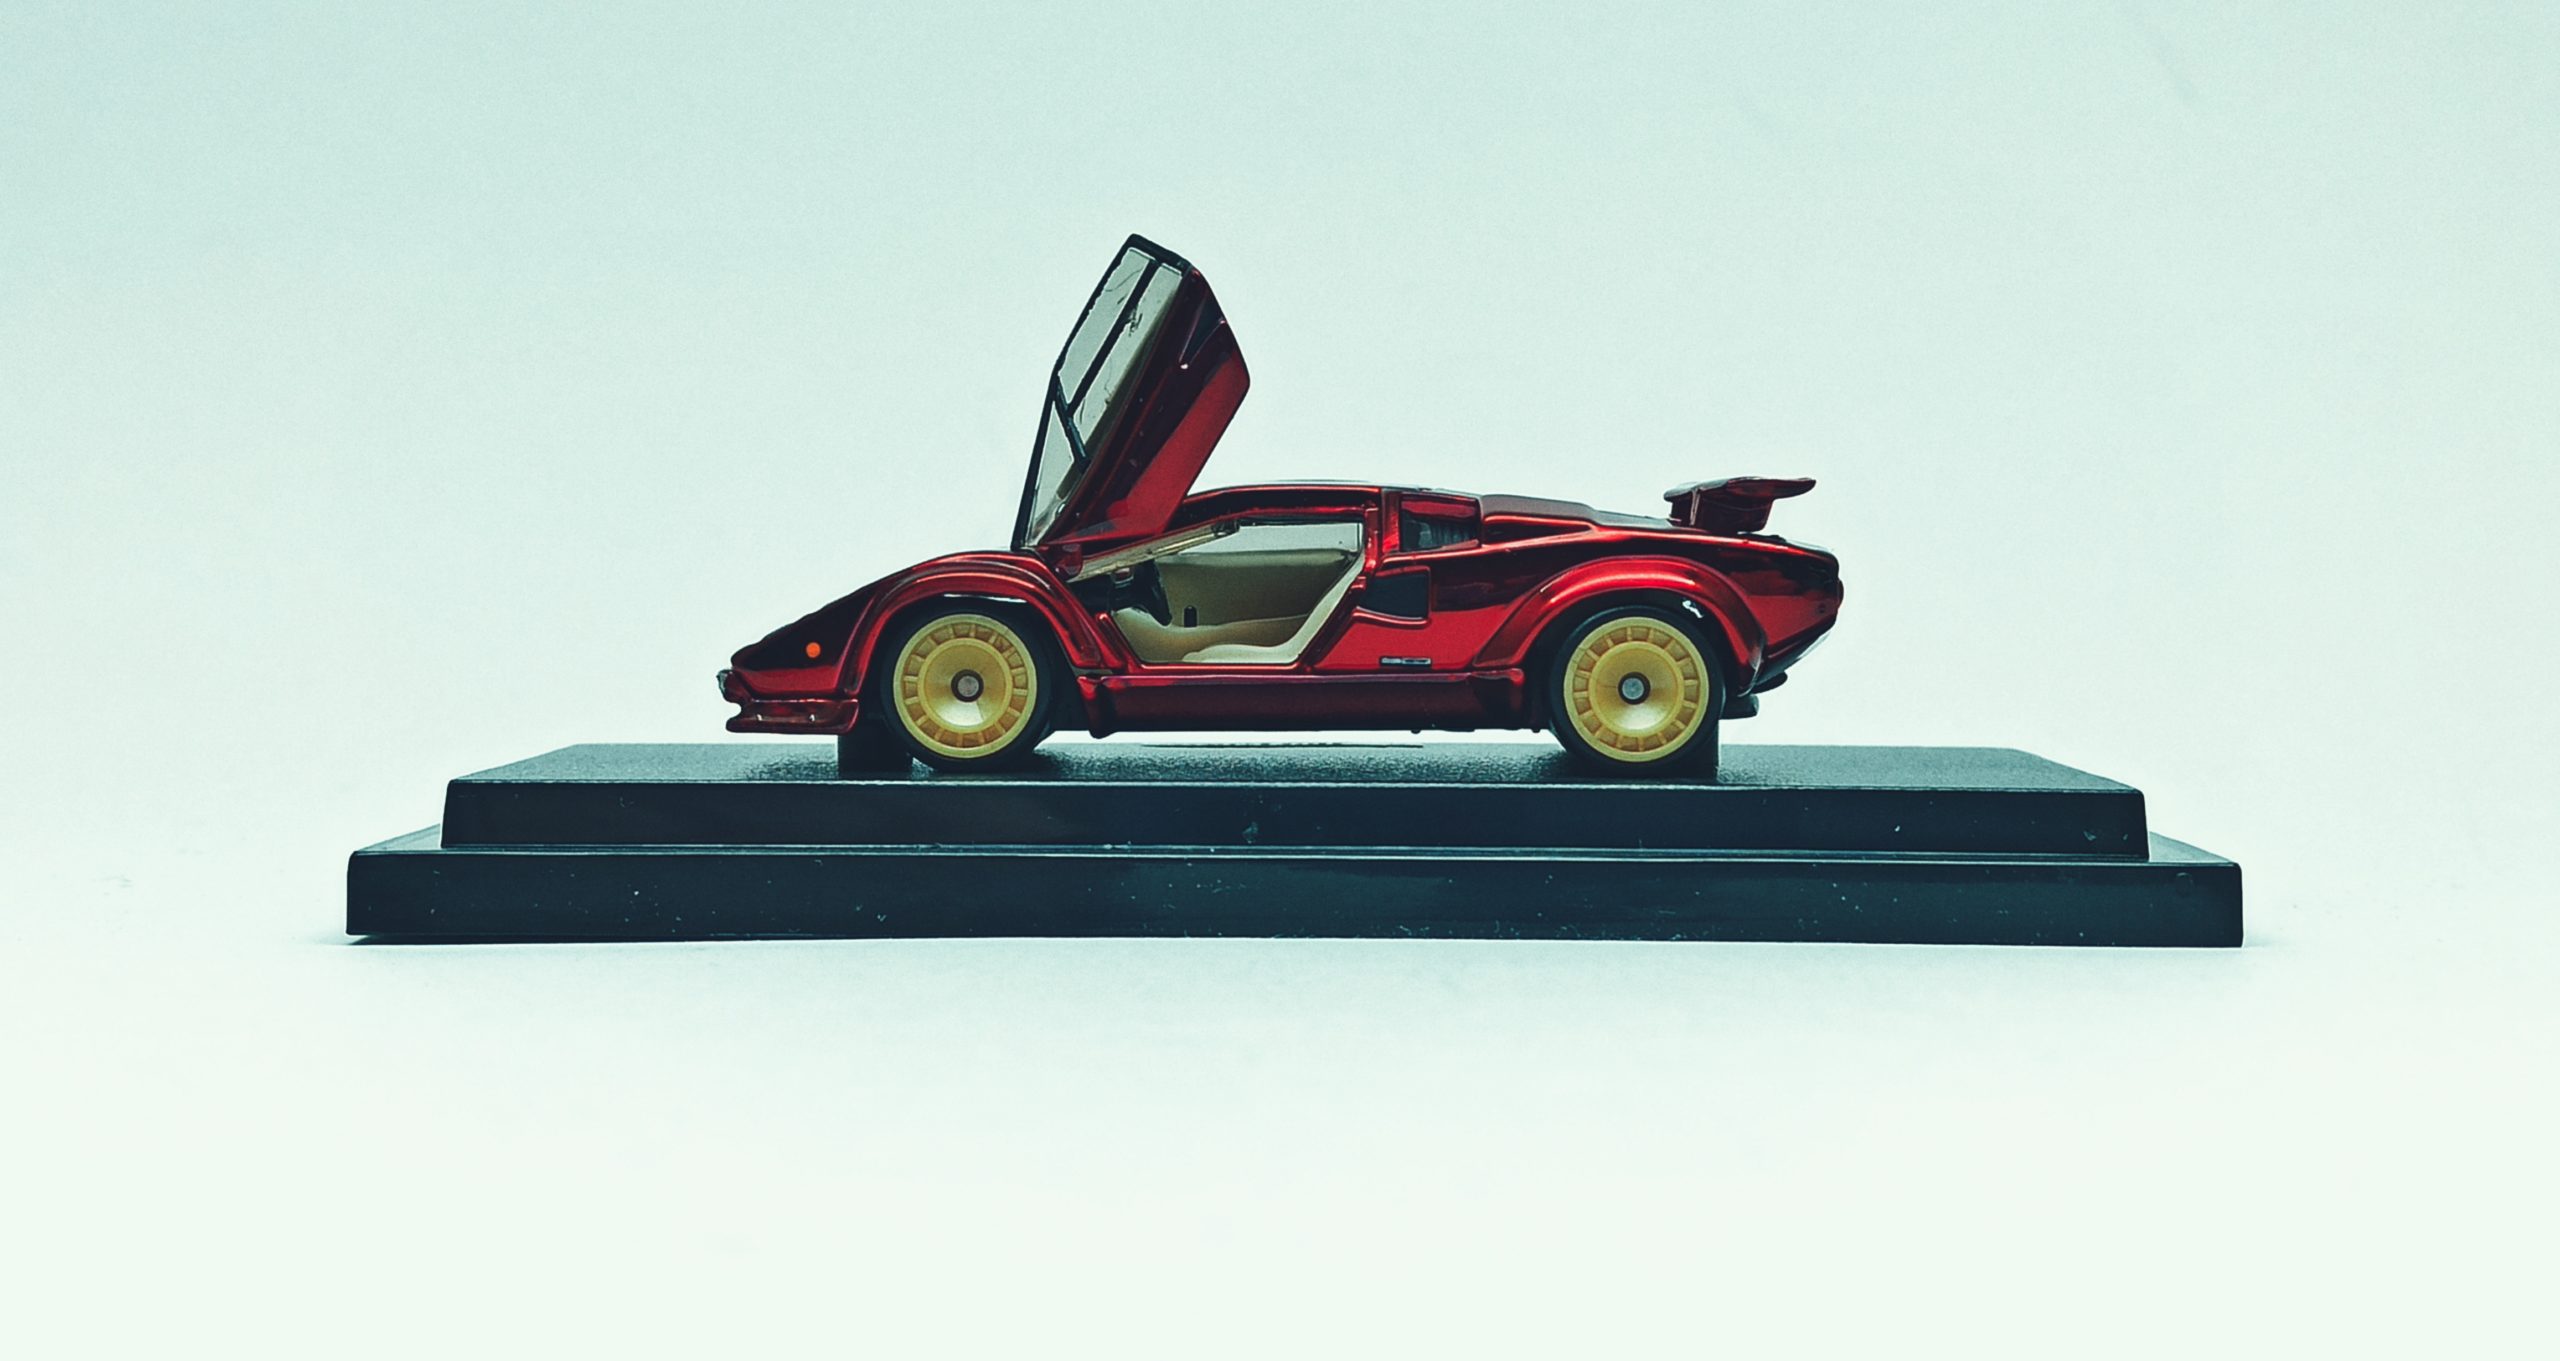 Hot Wheels '82 Lamborghini Countach LP500 S (GDF85) 2019 RLC Special Edition spectraflame red